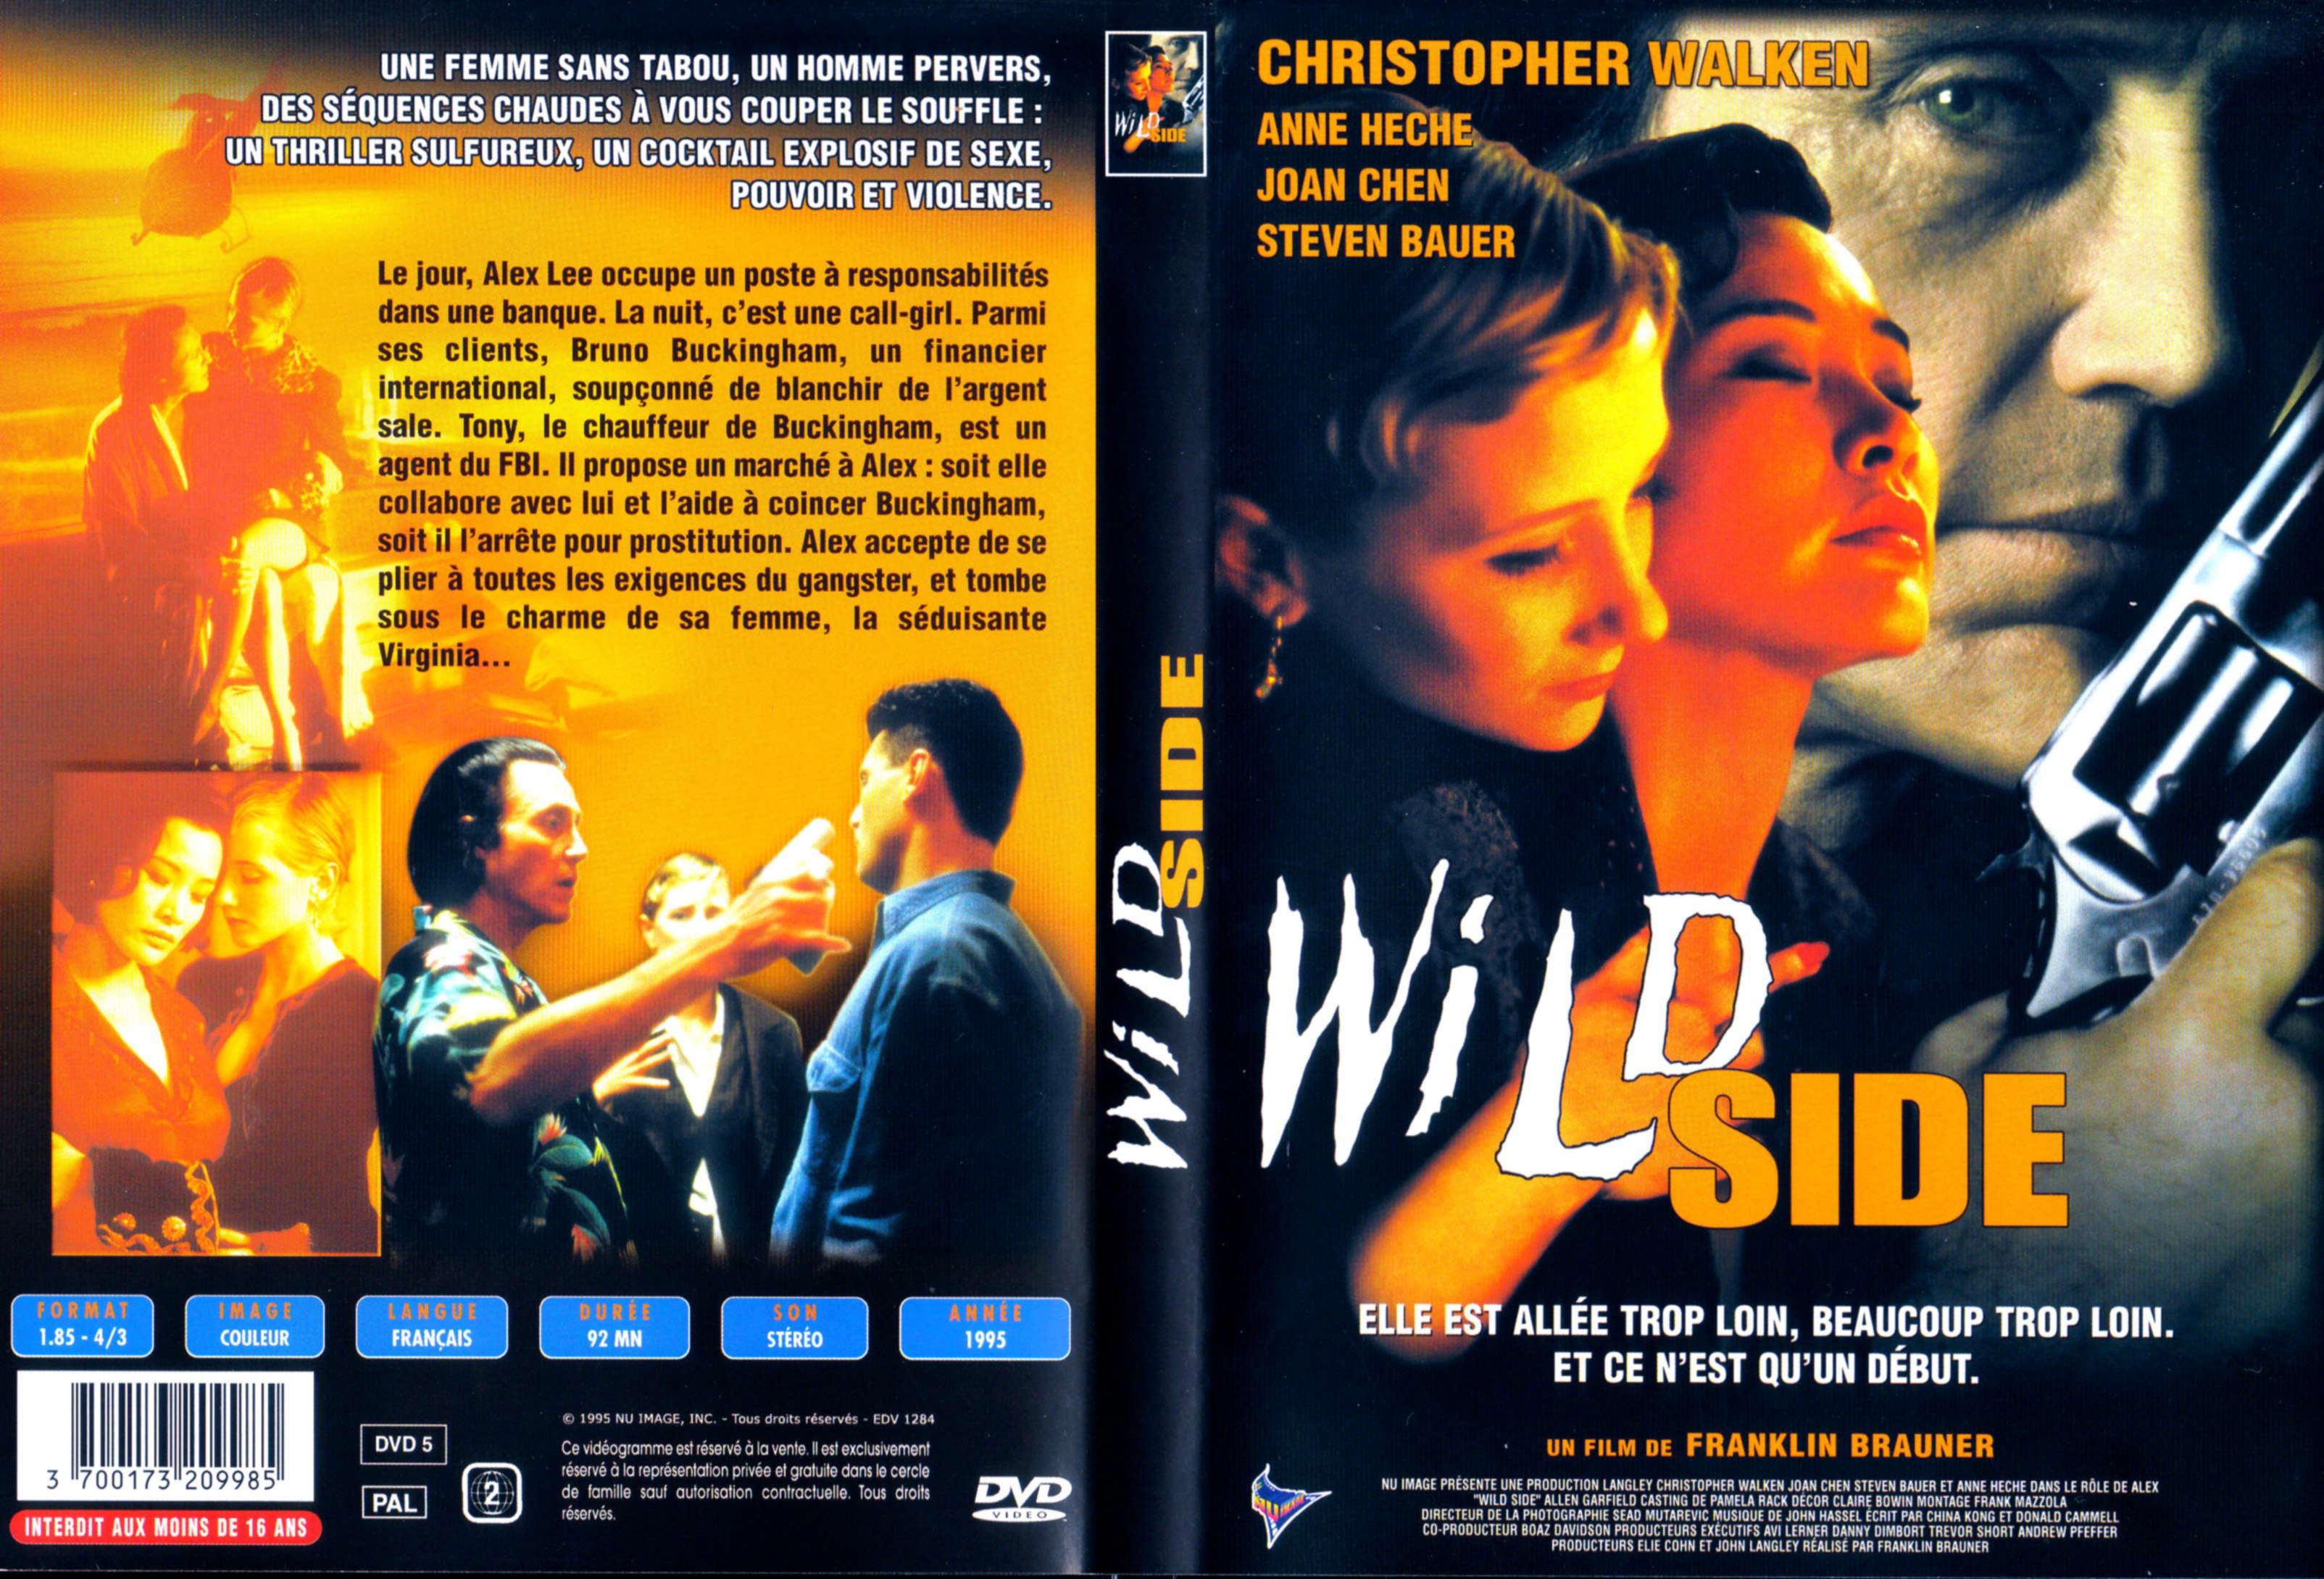 Jaquette DVD Wild side (1995)